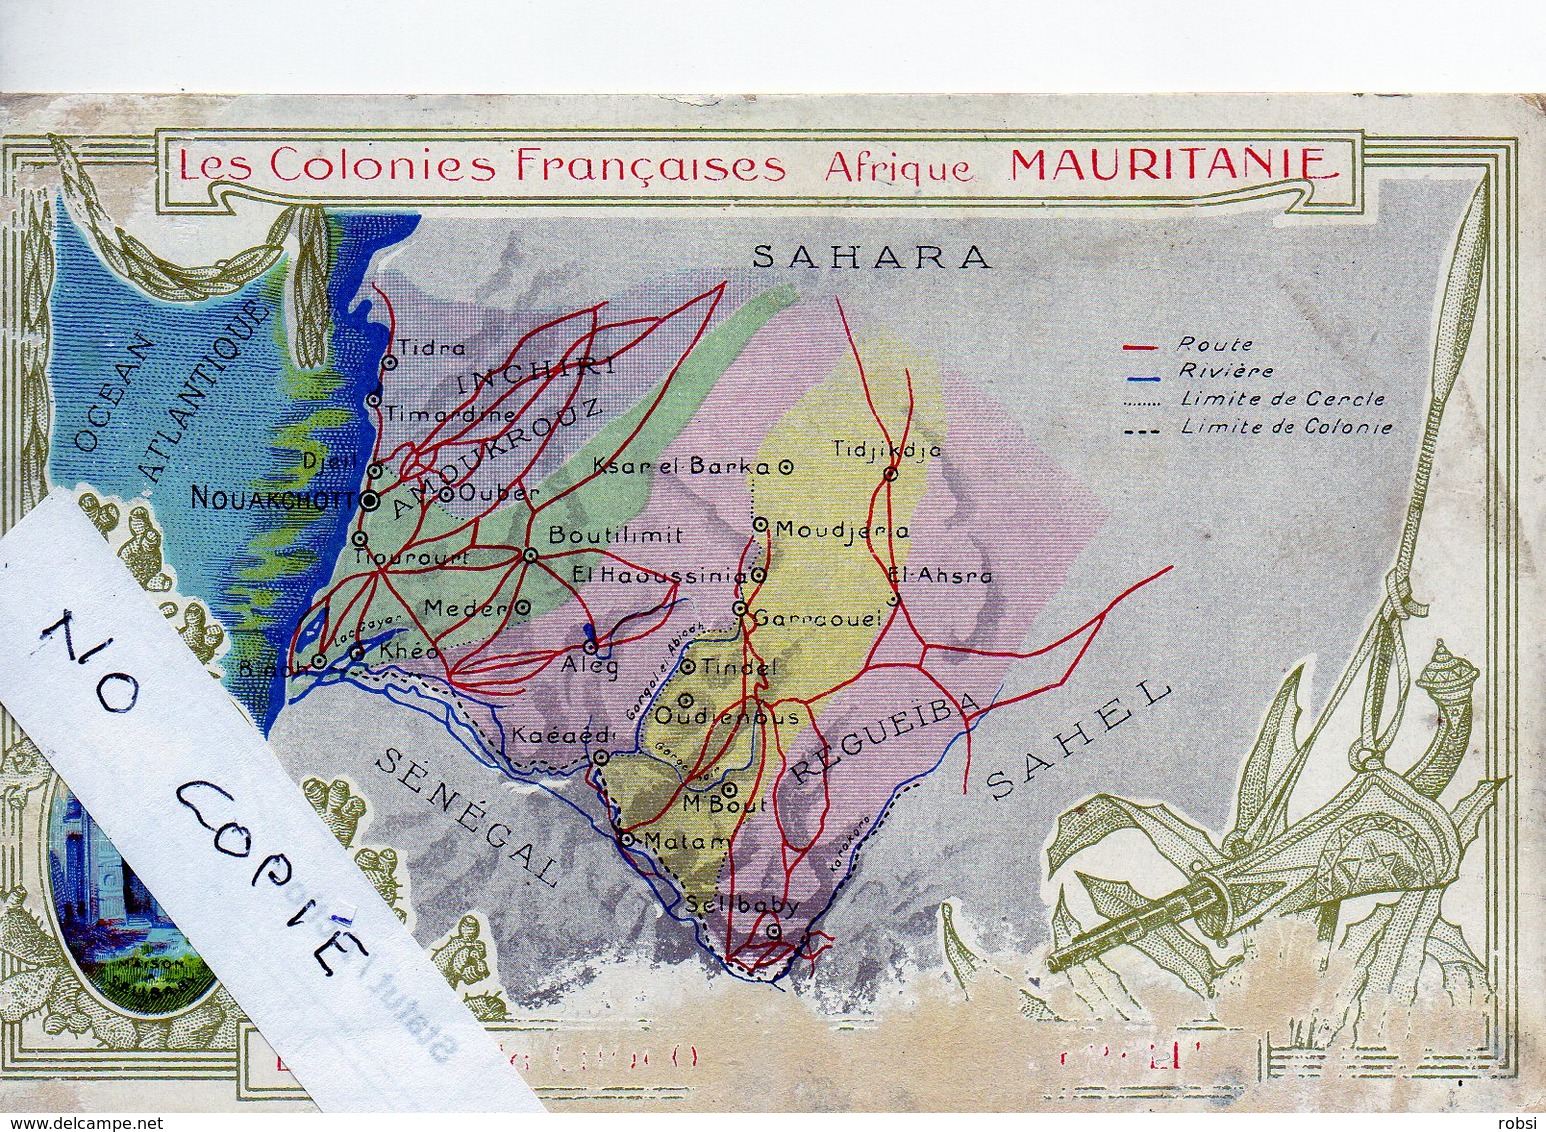 Mauritanie, Colonies Françaises, Carte Géographique - Mauritanie